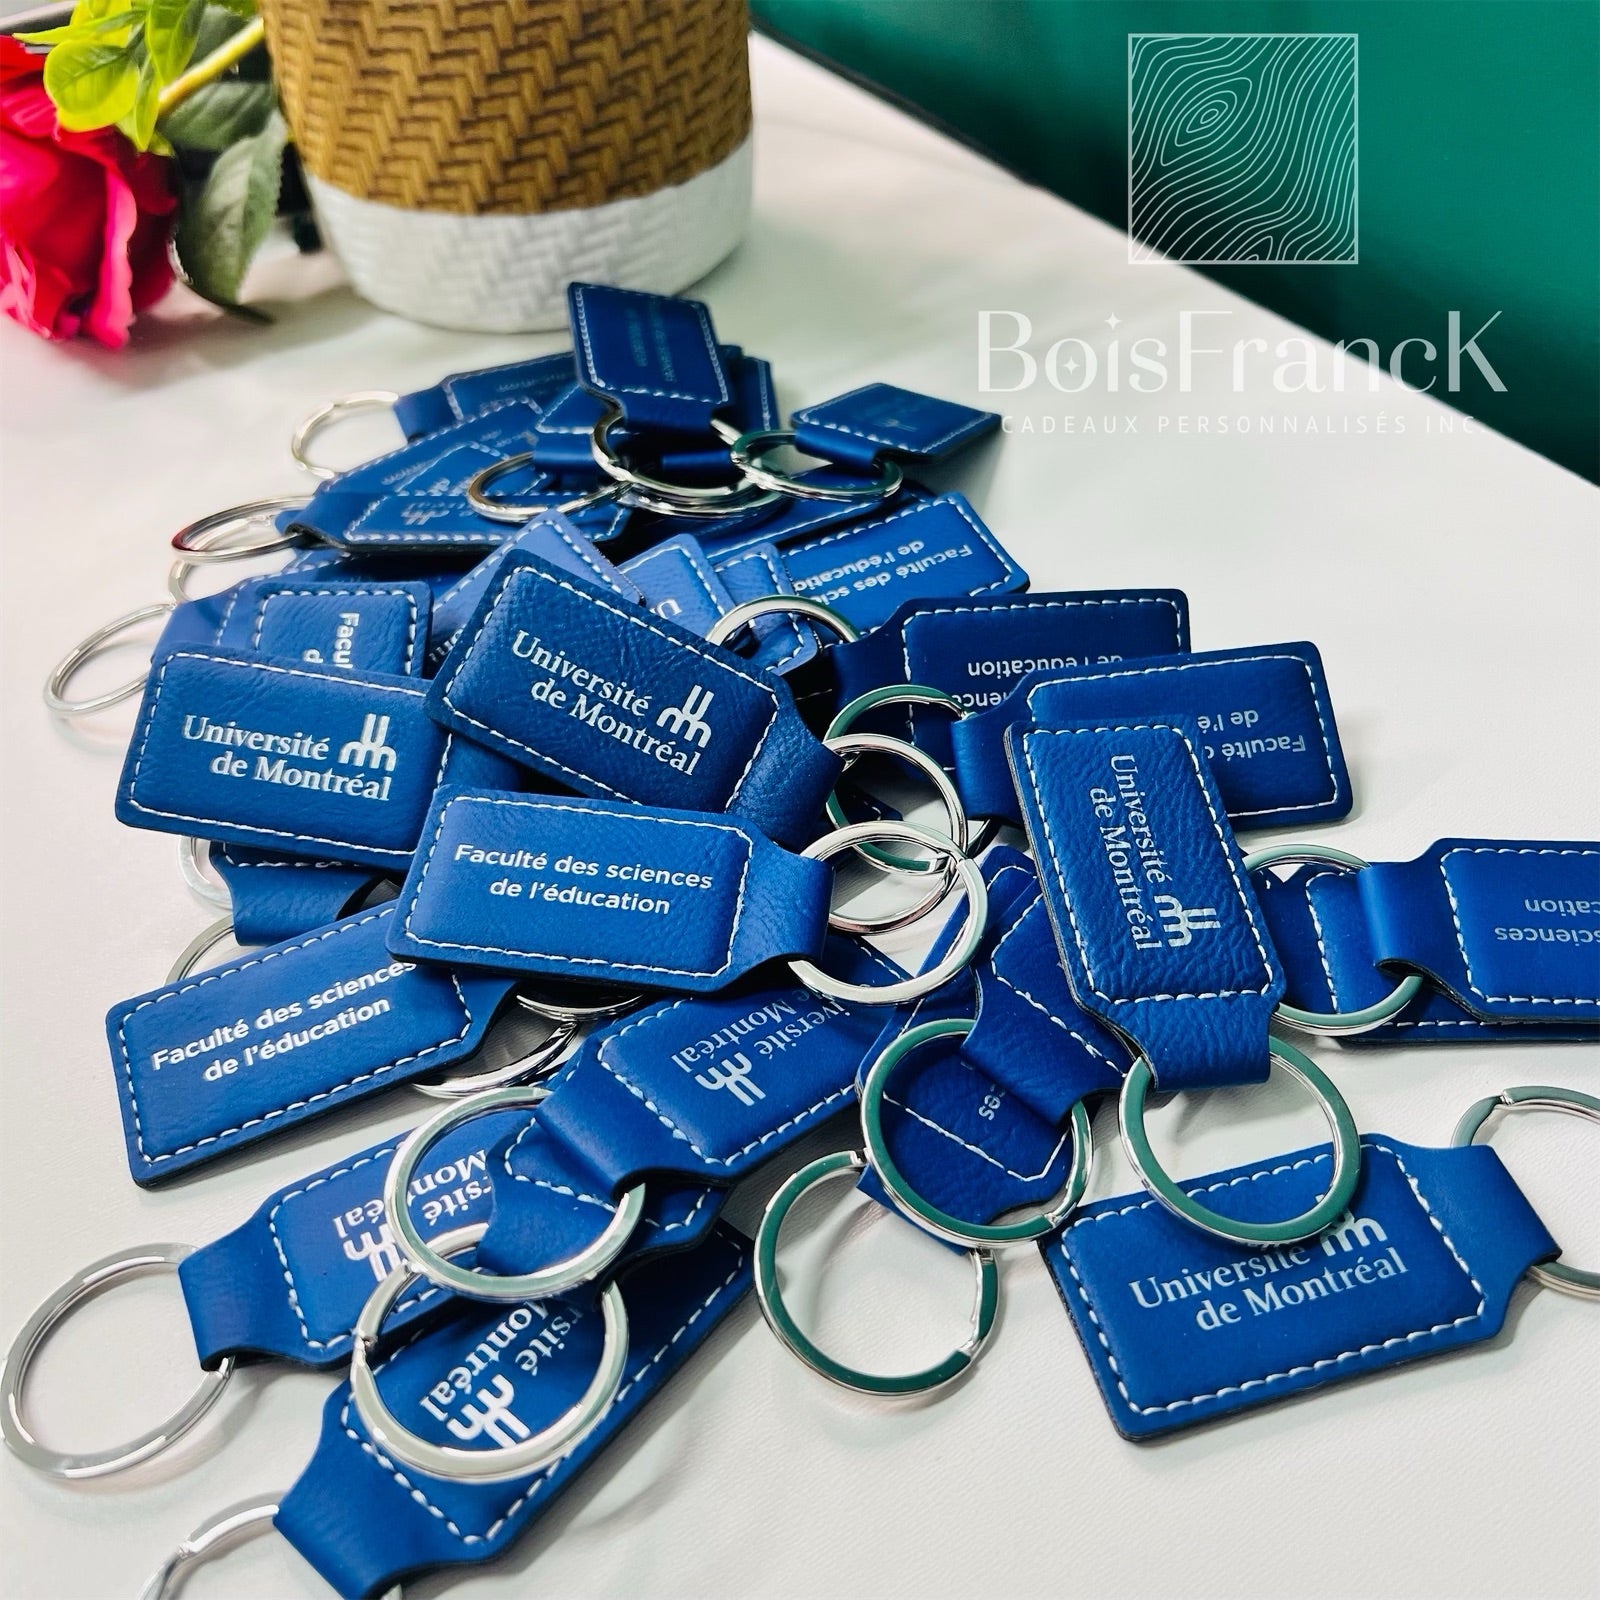 Porte-clés en cuir bleu gravés du logo UdeM- BoisFrancK